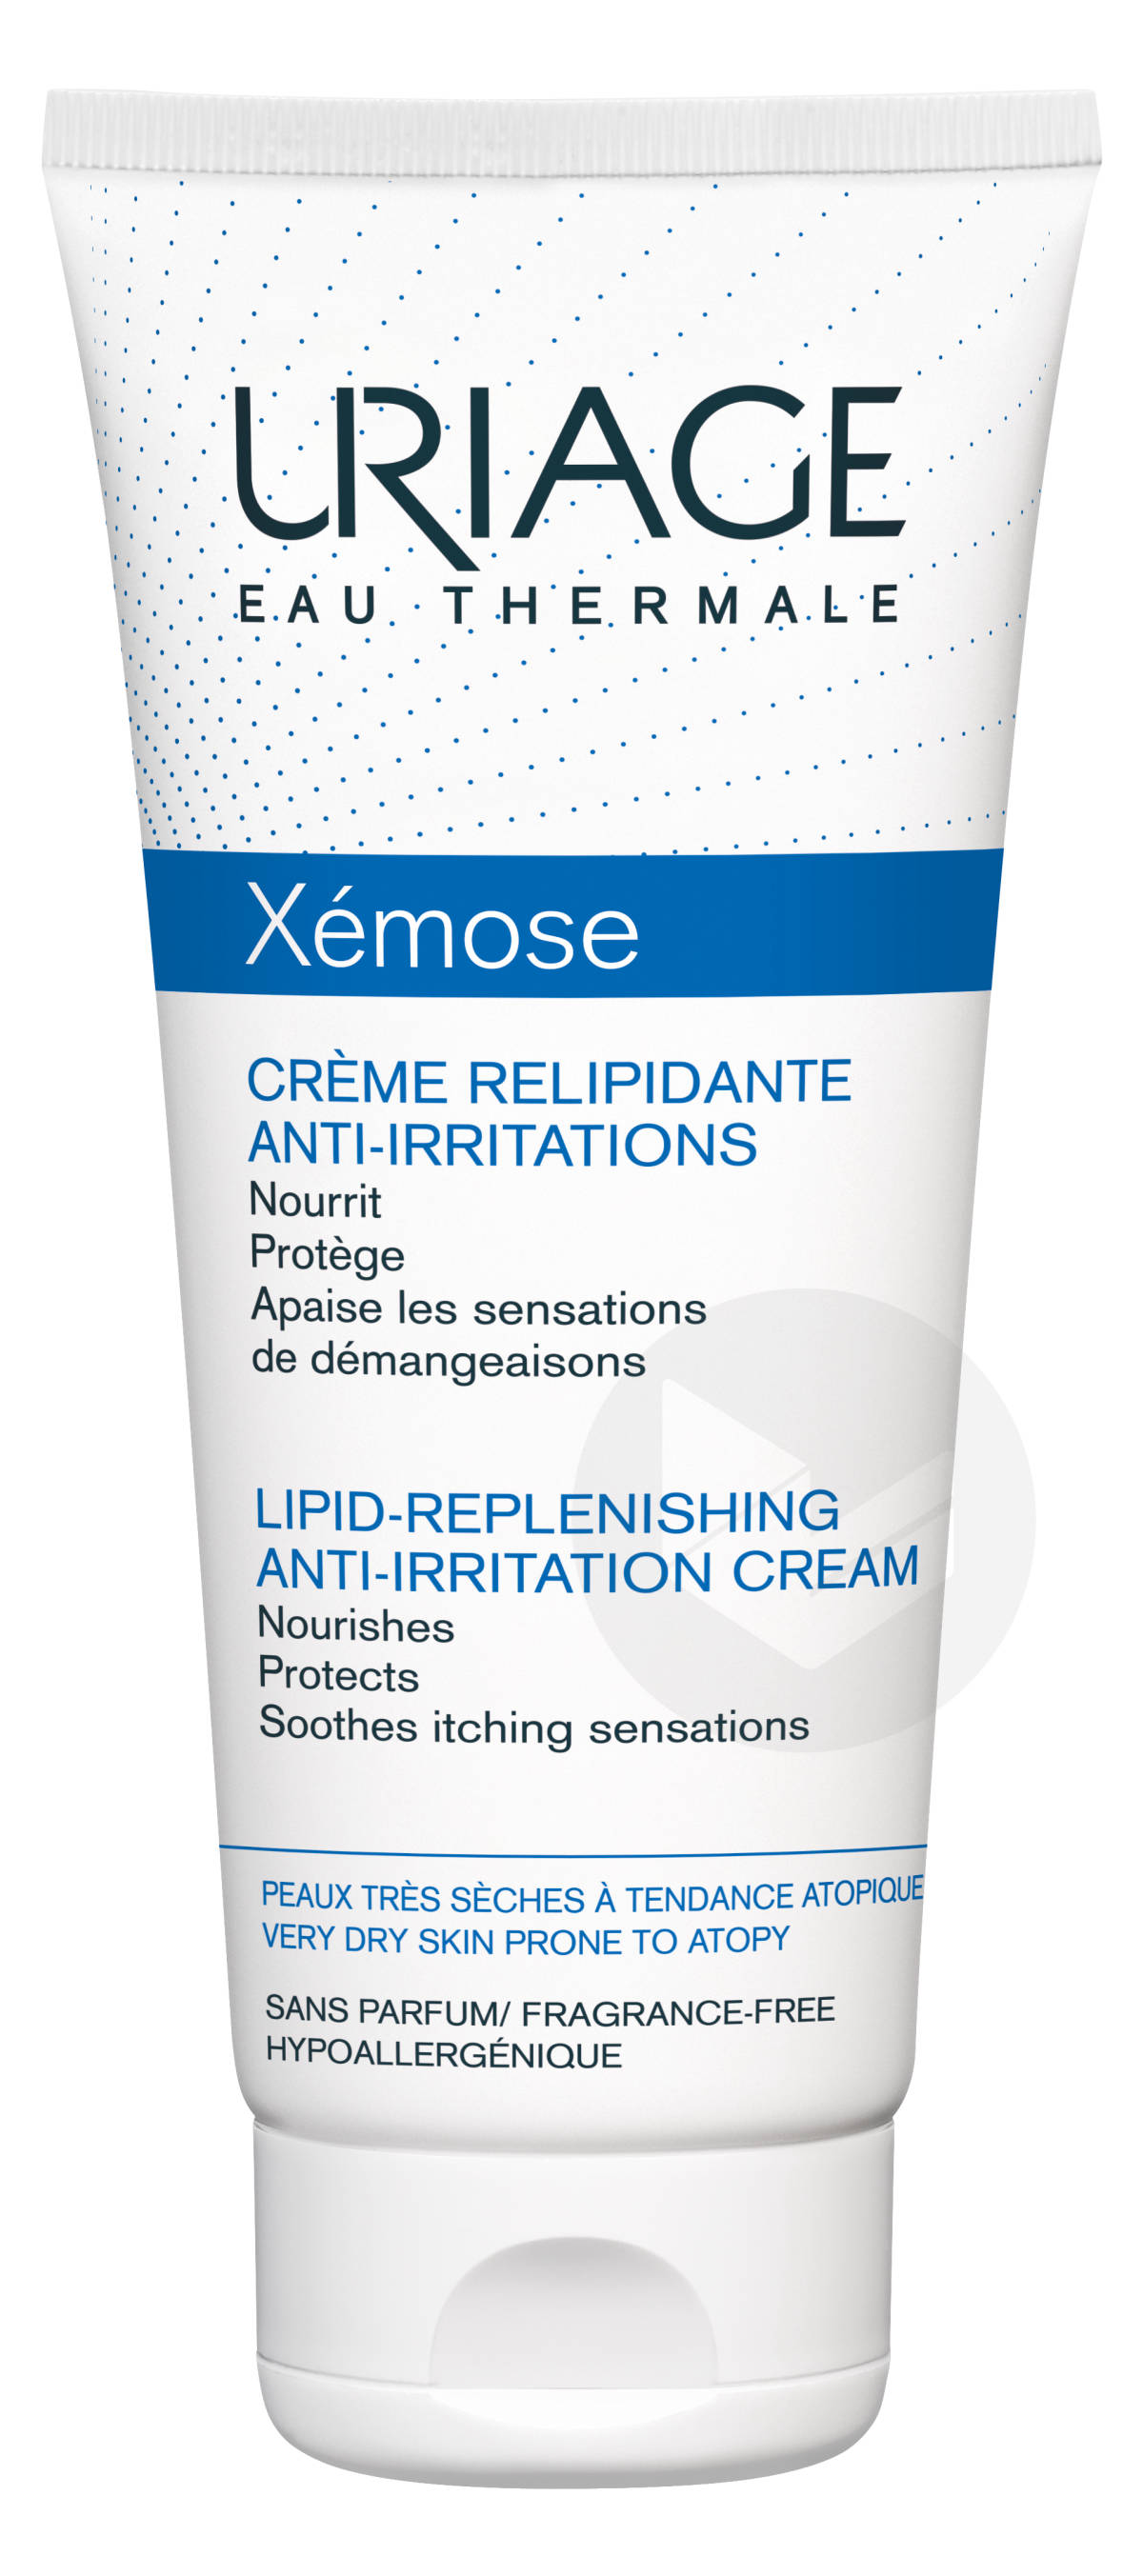 Xémose crème relipidante anti-irritations 200ml